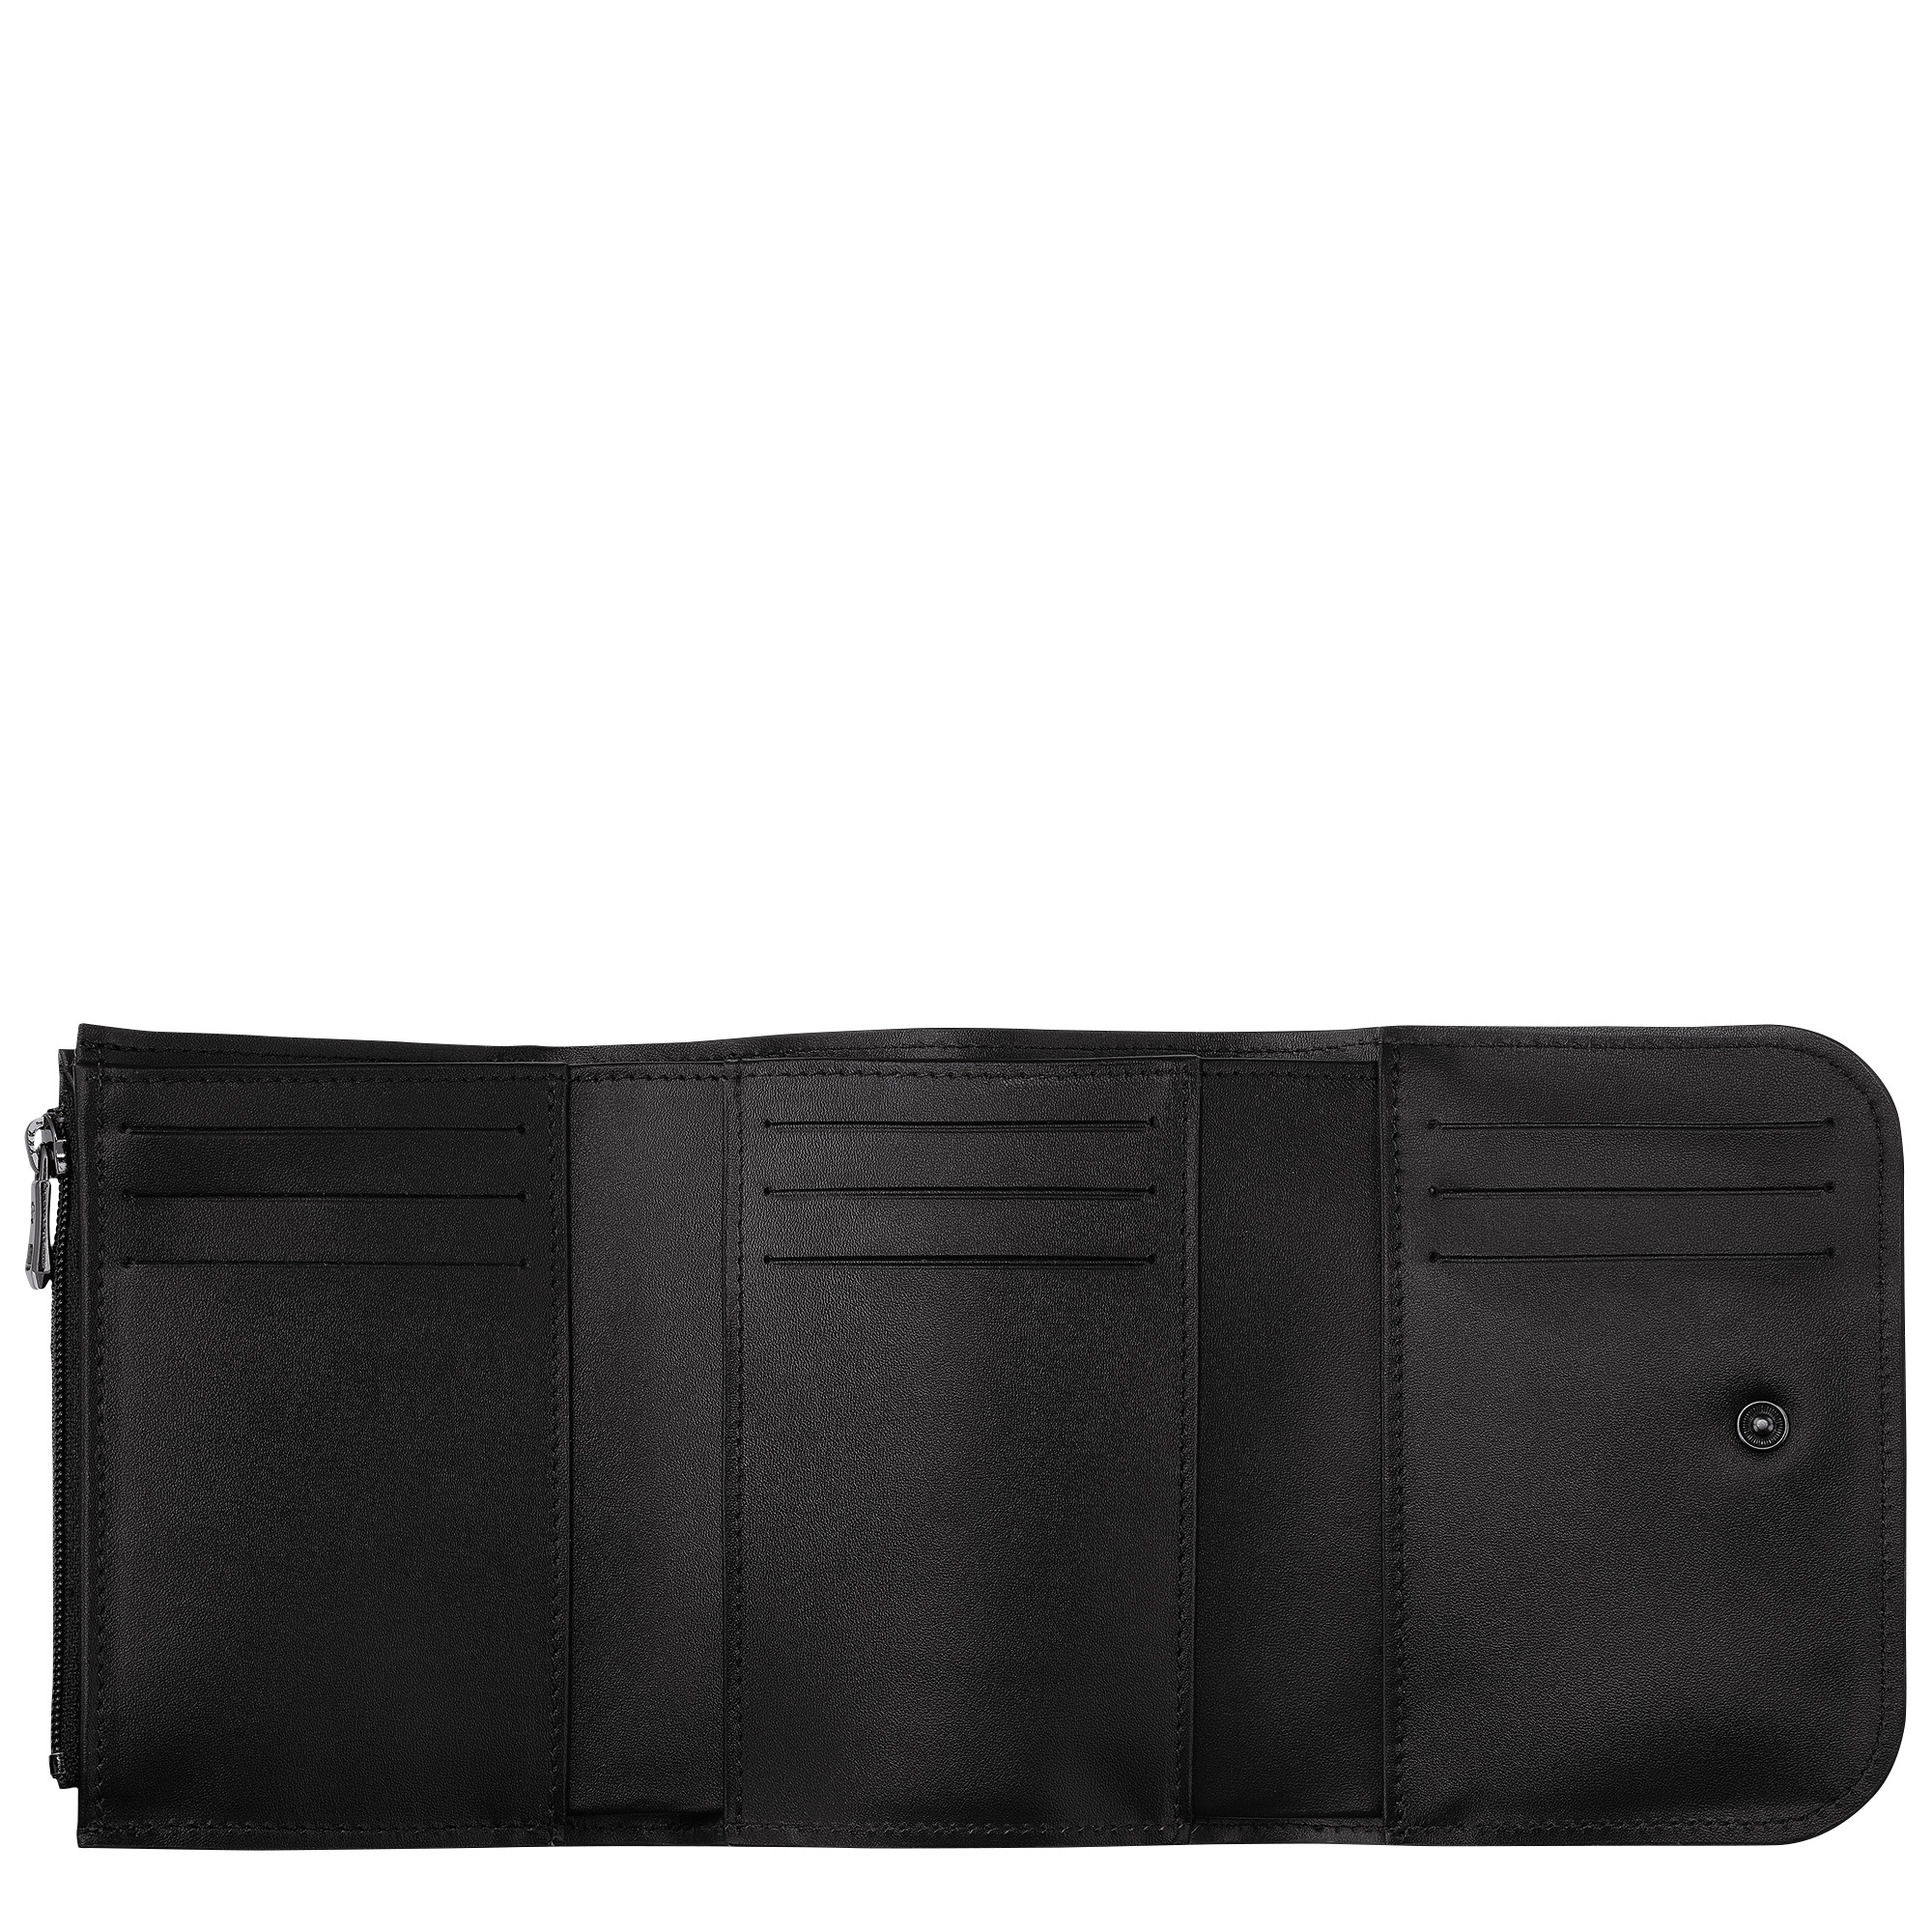 Box-Trot Wallet Black - Leather - 2